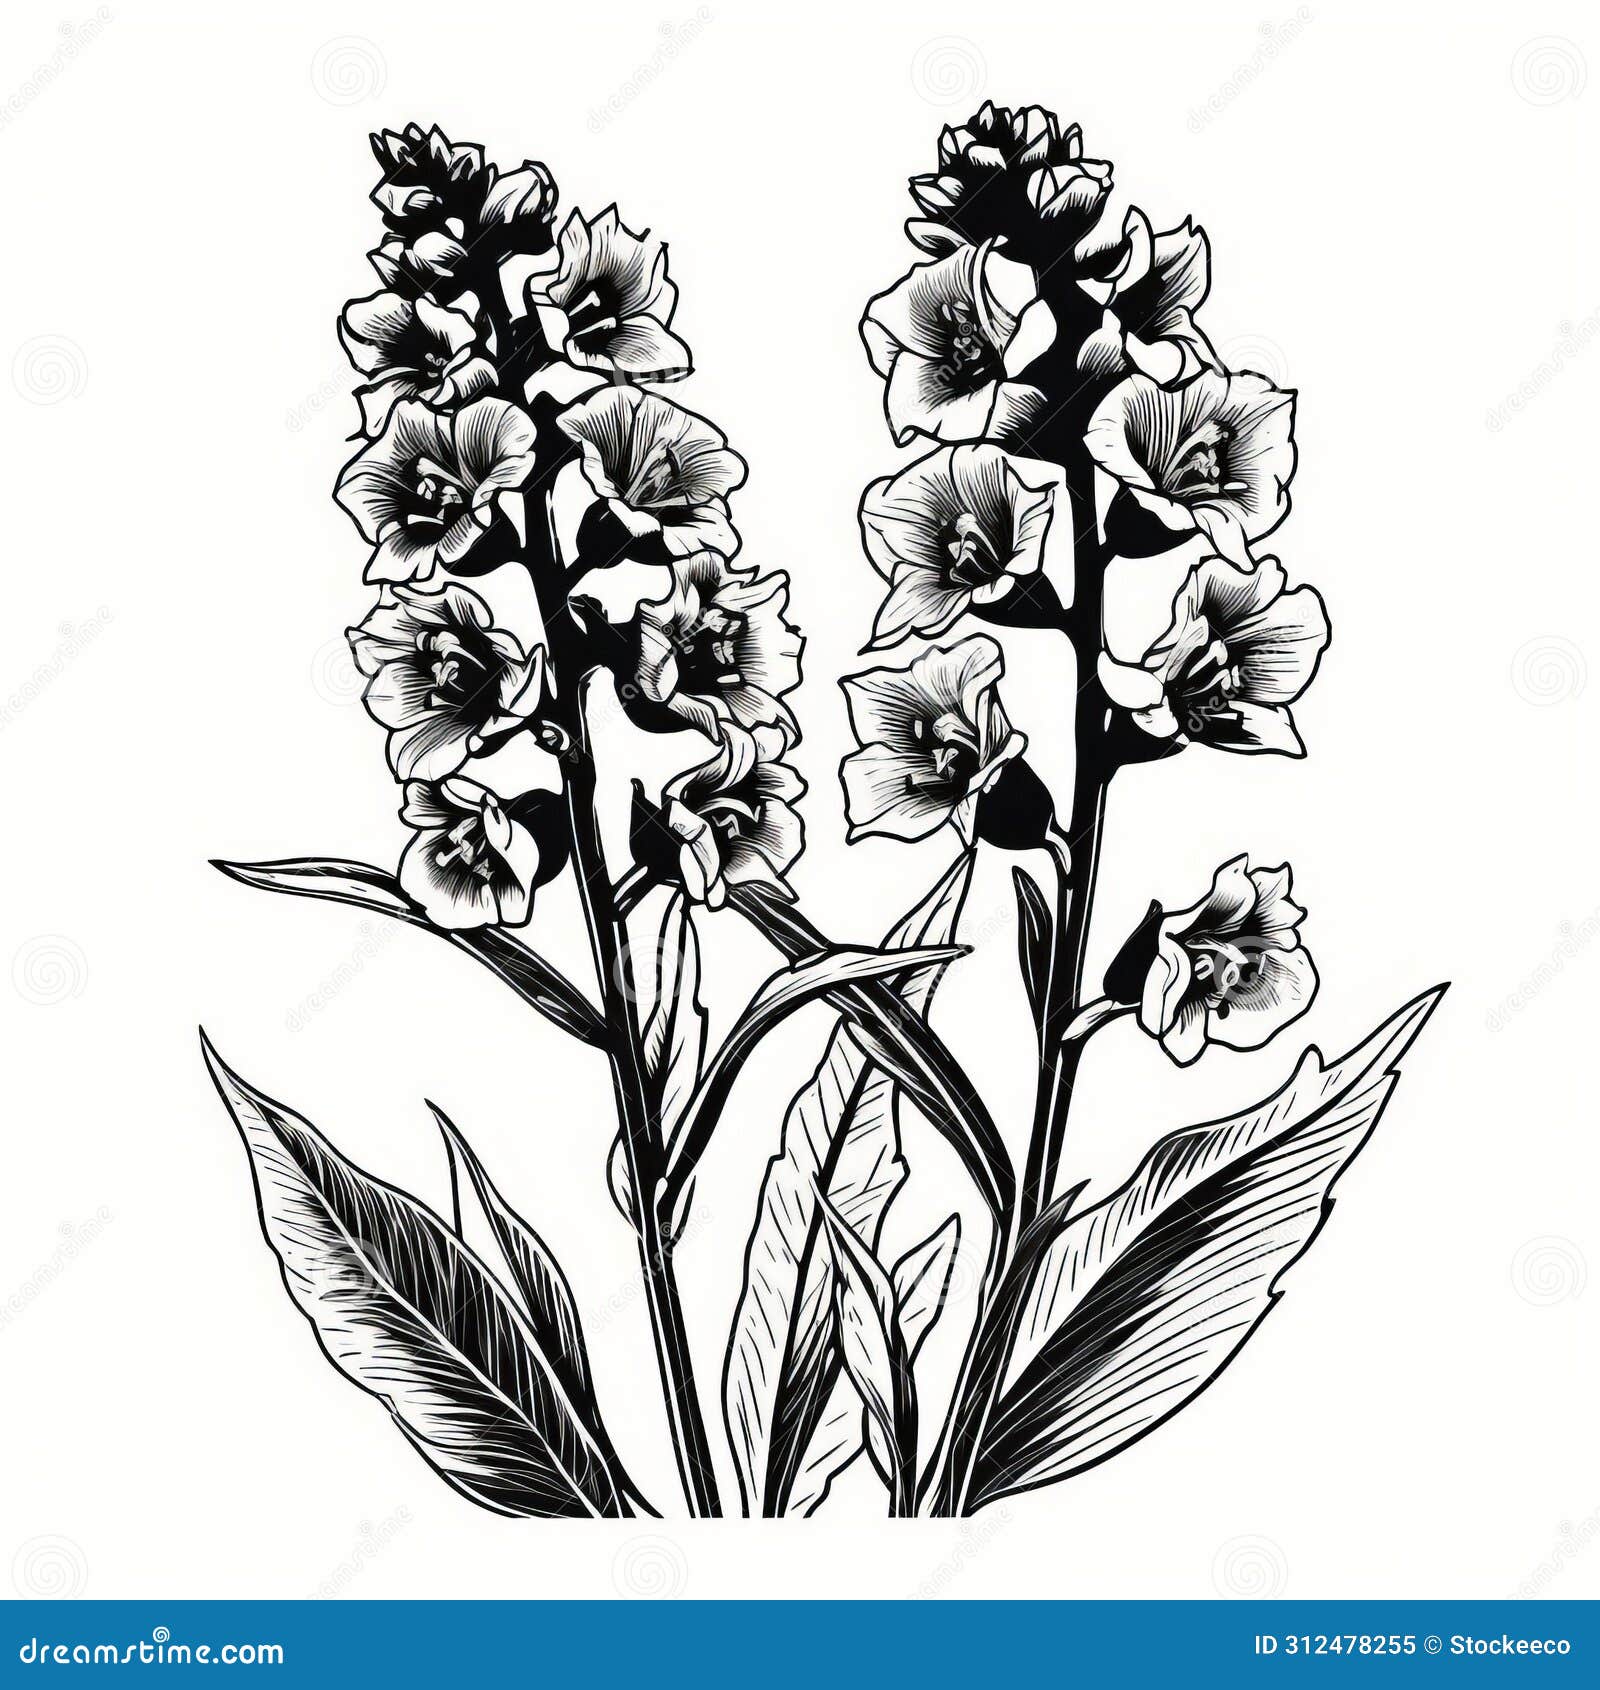 delphinium linocut woodcut print: black and white  of herbs in full bloom